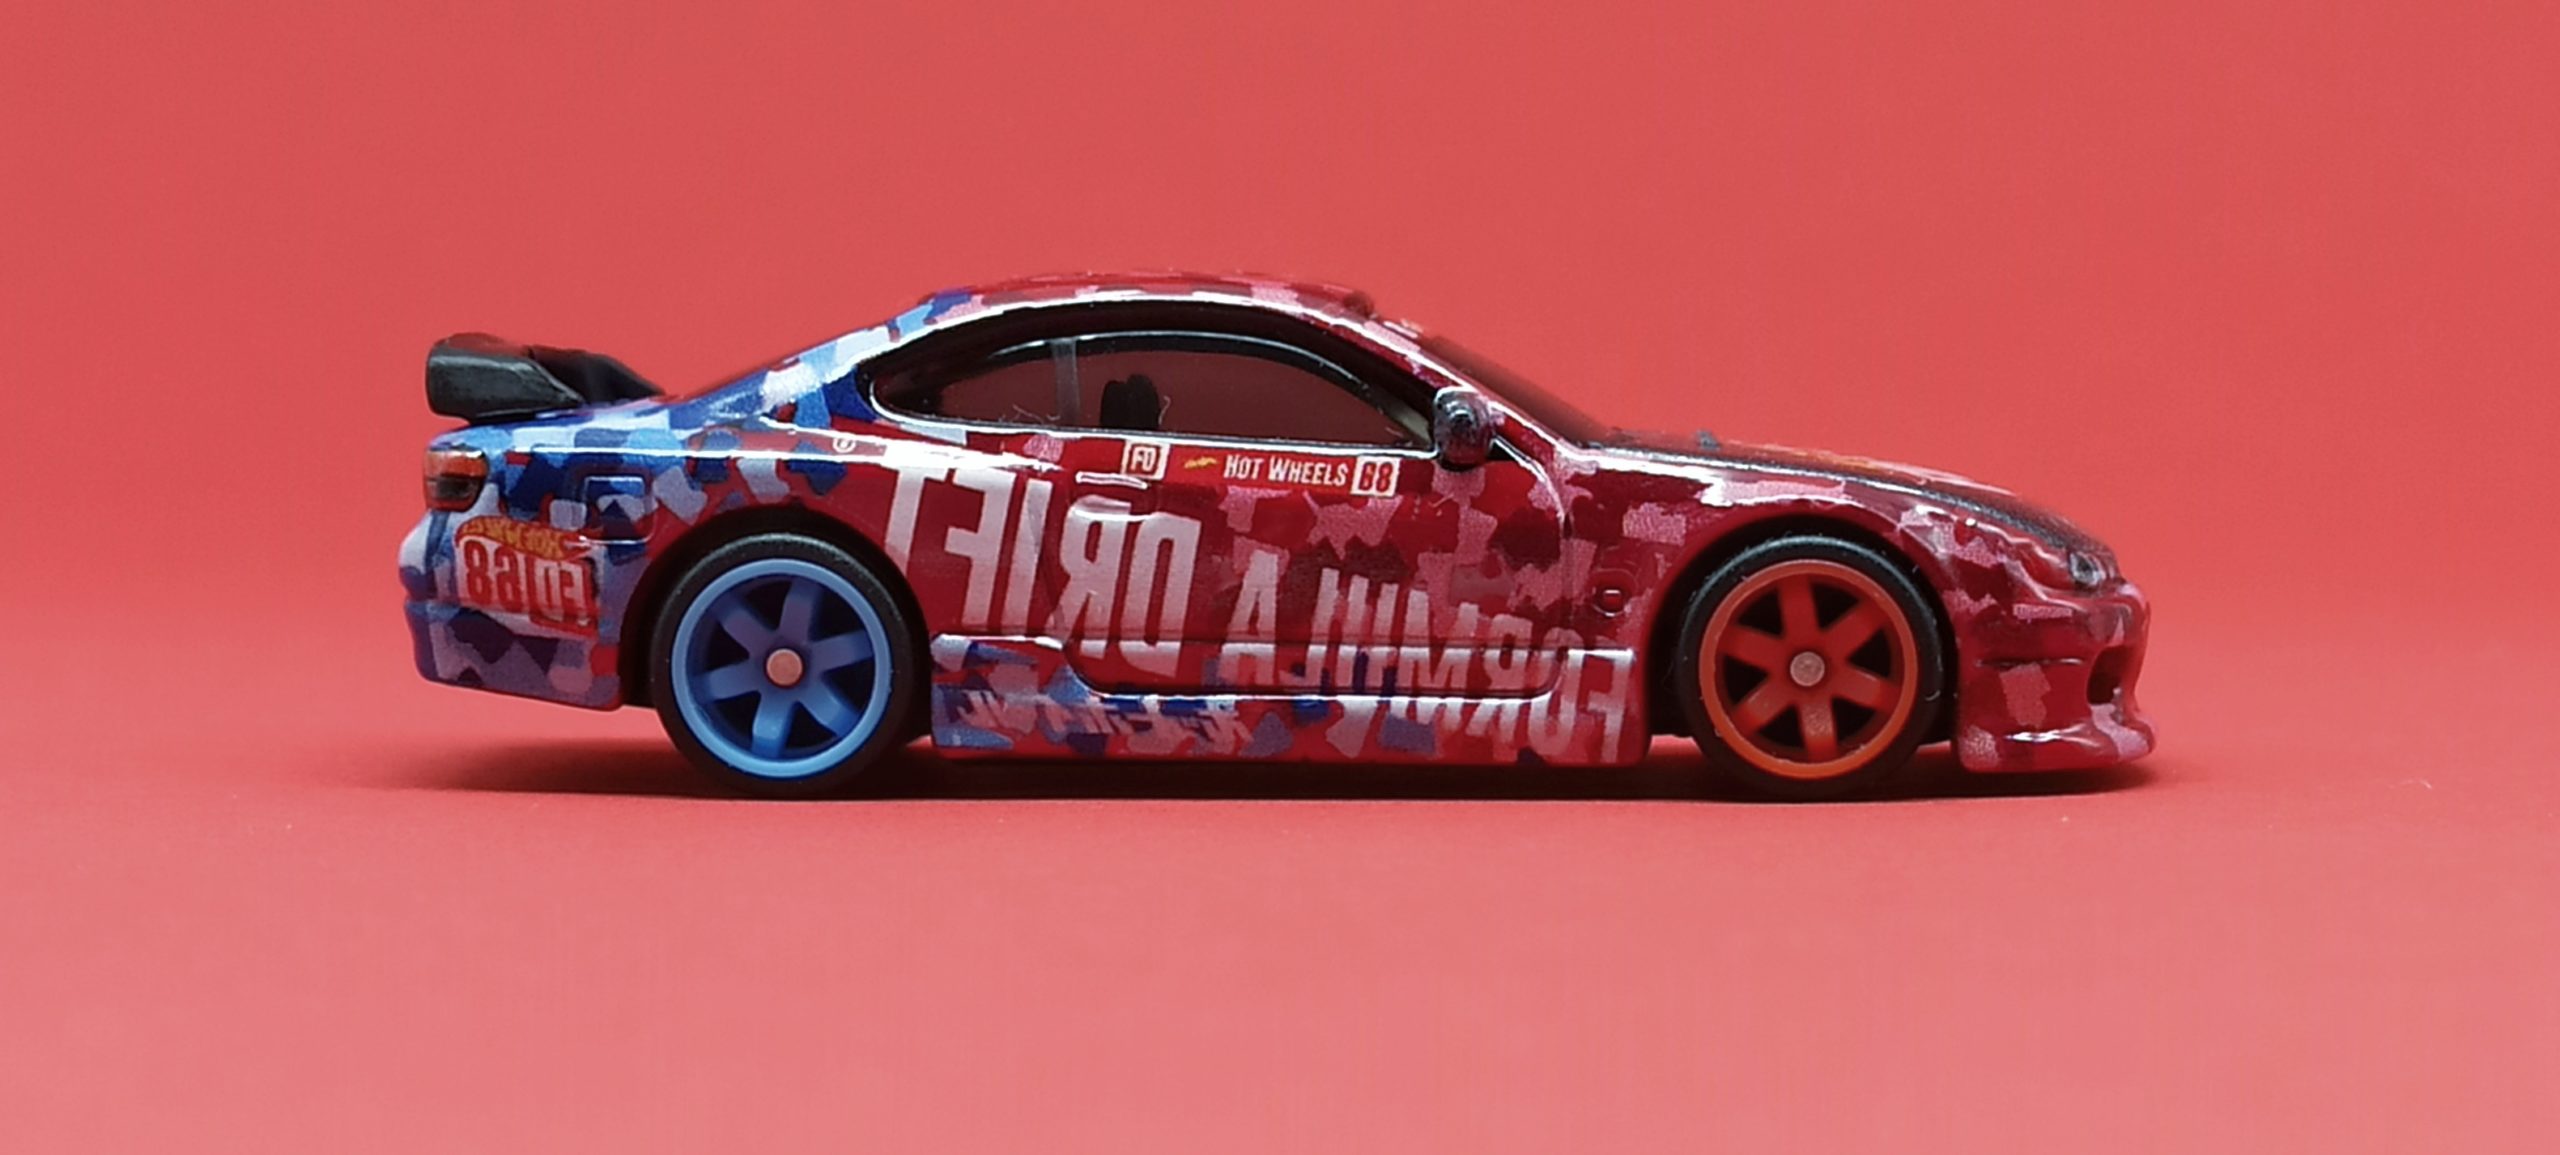 Hot Wheels Nissan Silvia S15 2018 model (GRB46) 2020 Hot Wheels Boulevard #7 Formula Drift red & blue side